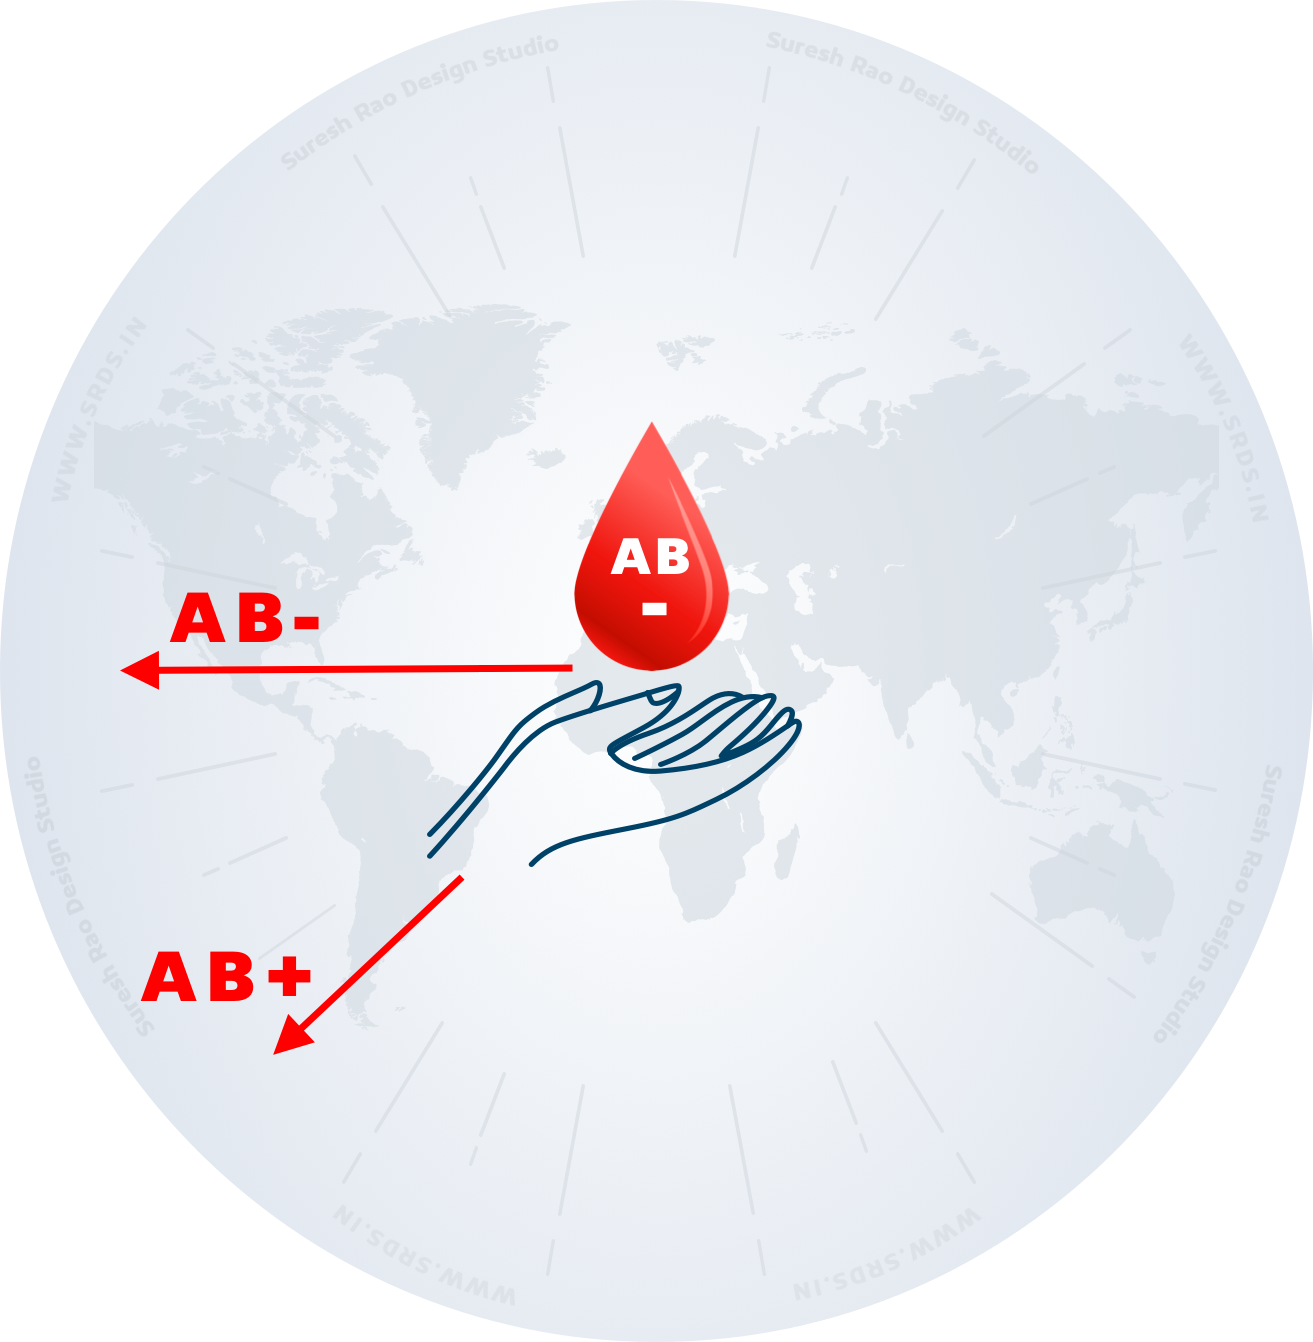 ab minus blood group match